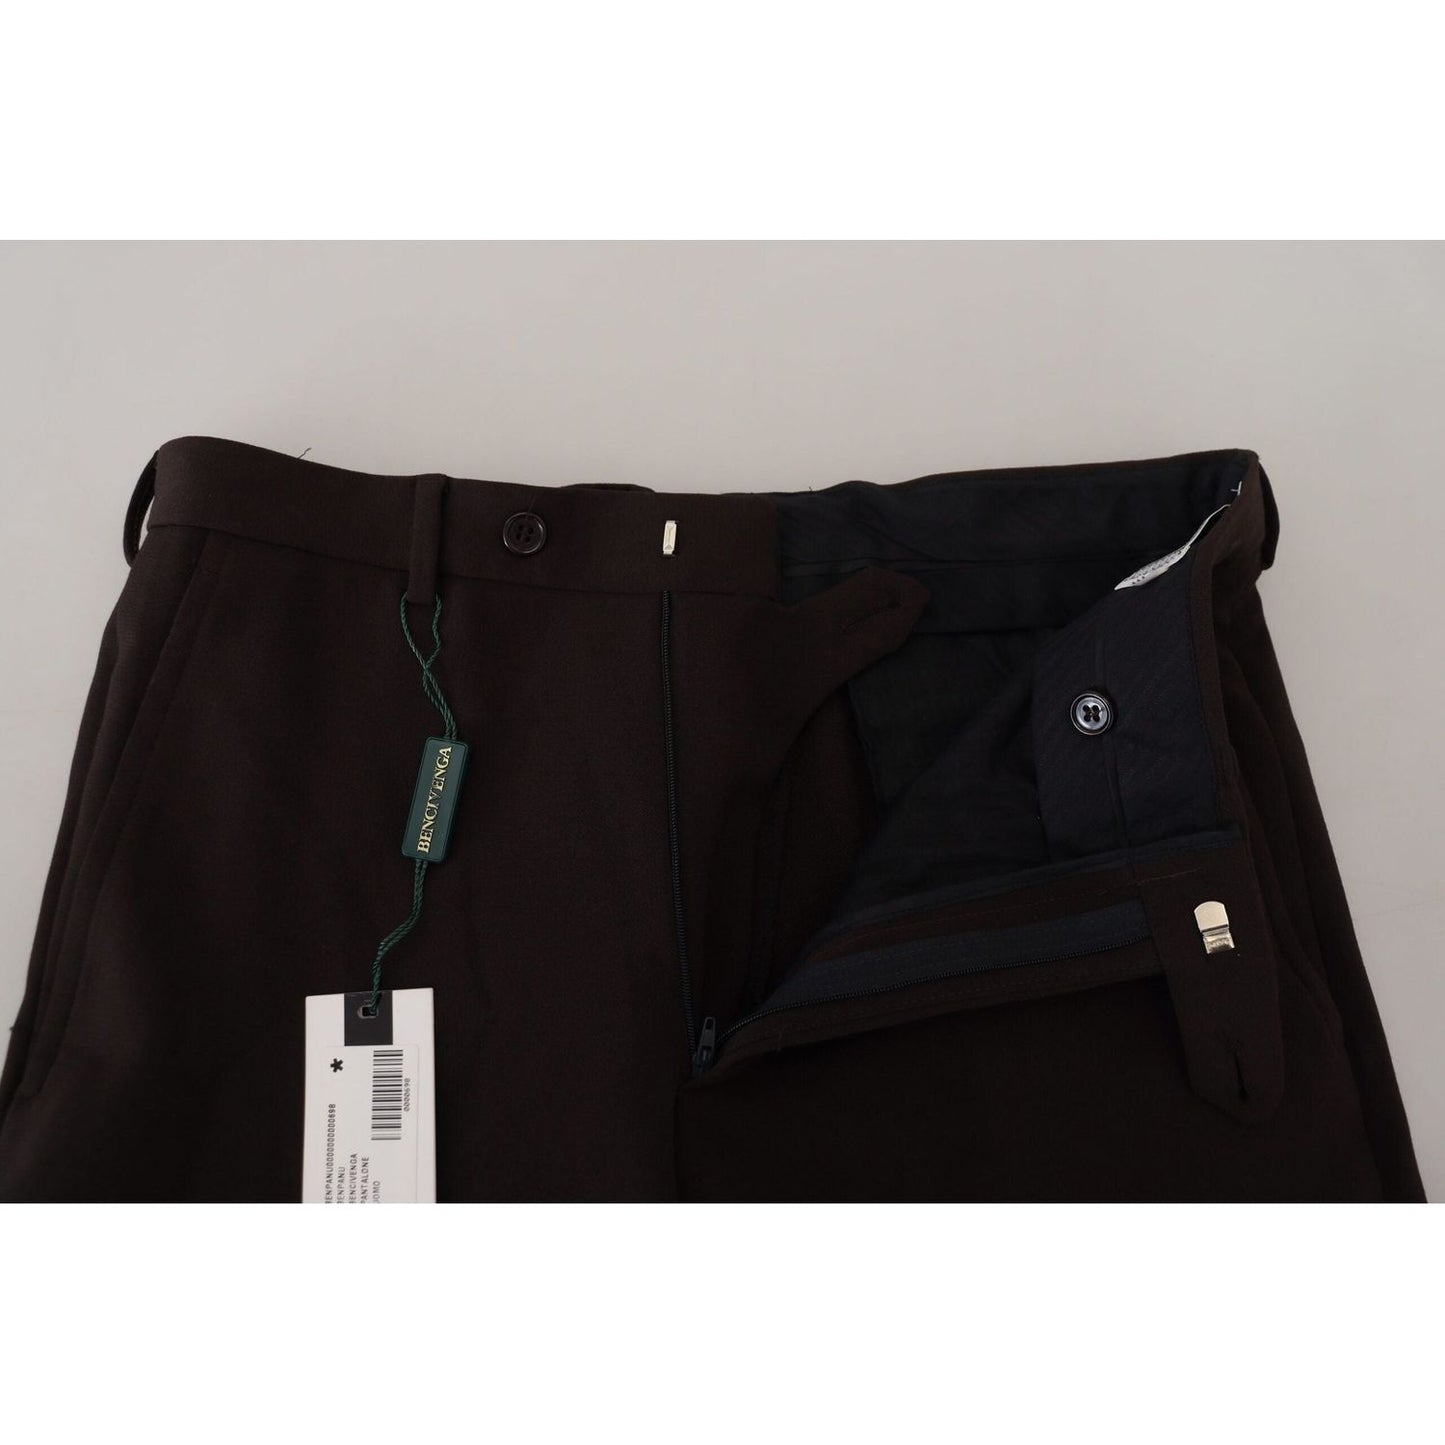 BENCIVENGA Elegant Italian Brown Pants for Men brown-straight-fit-formal-men-pants IMG_7290-scaled-3d804728-62e.jpg